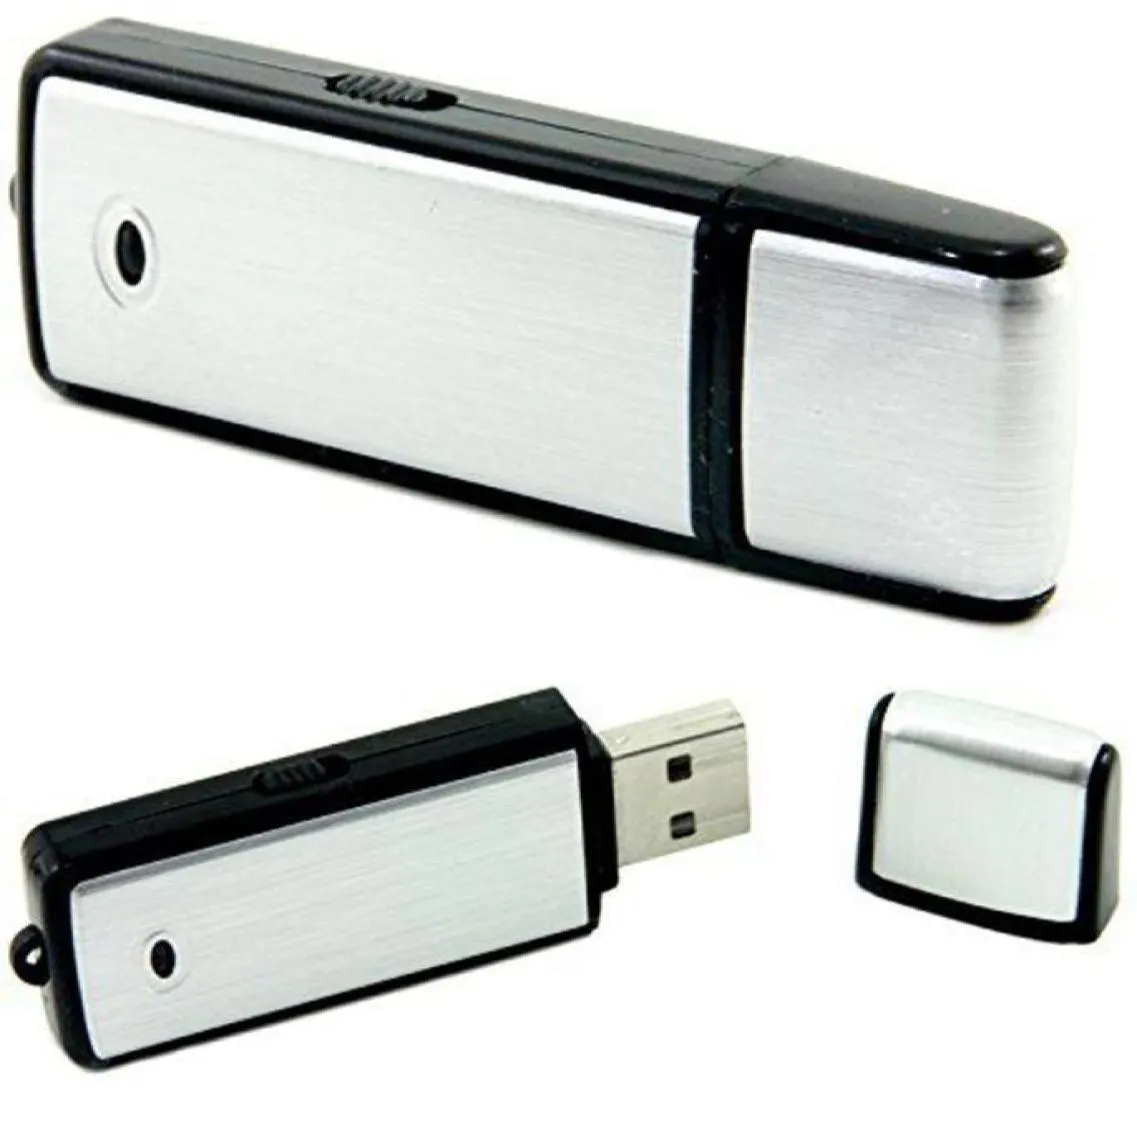 USB Sound Recorder - 8GB Voice Recording Device - Digital o Recorder - No Flashing Light When Recording PQ1417023277